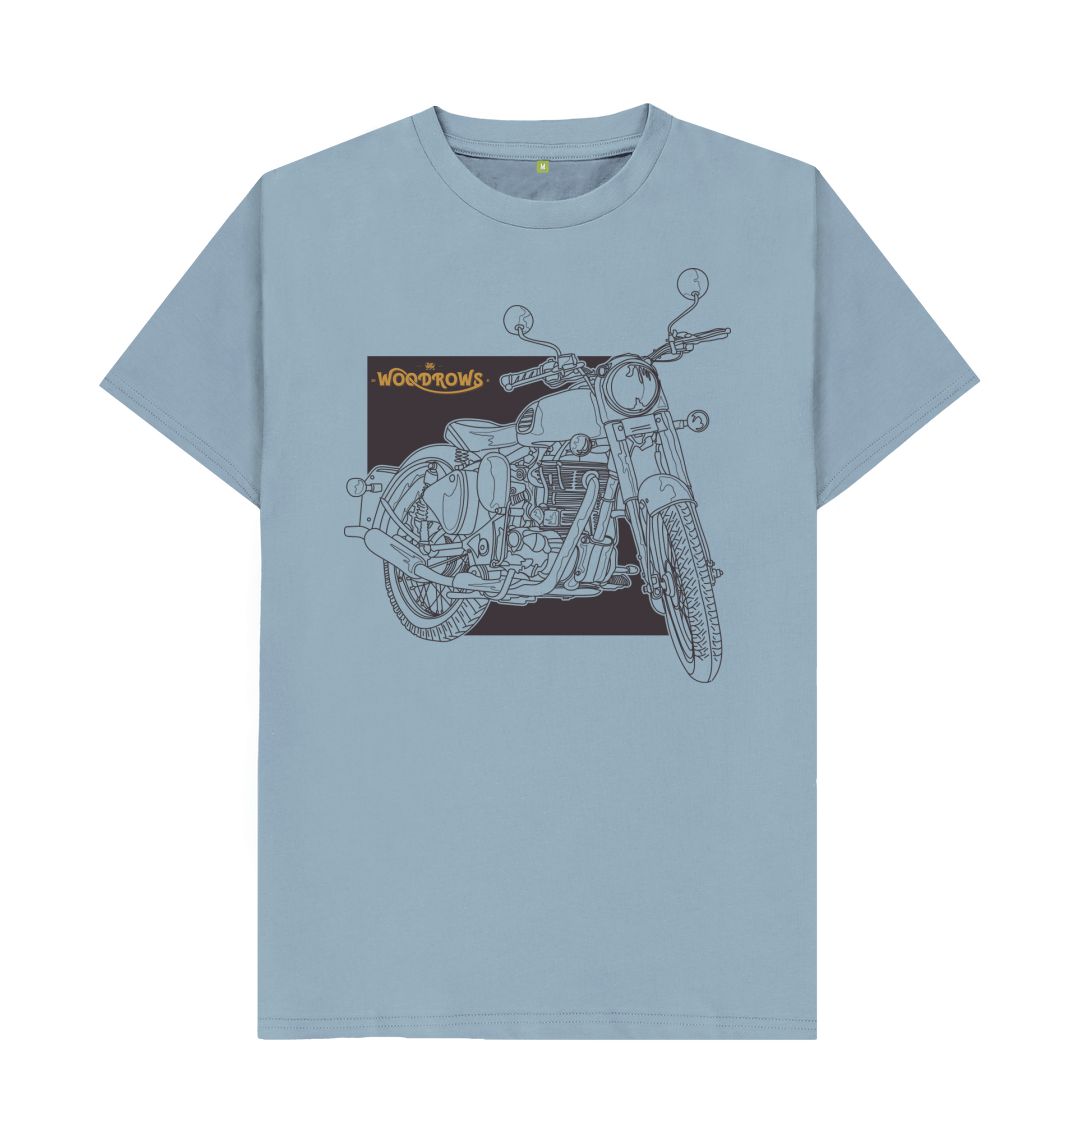 Stone Blue Woodrow's Classic bike T-Shirt